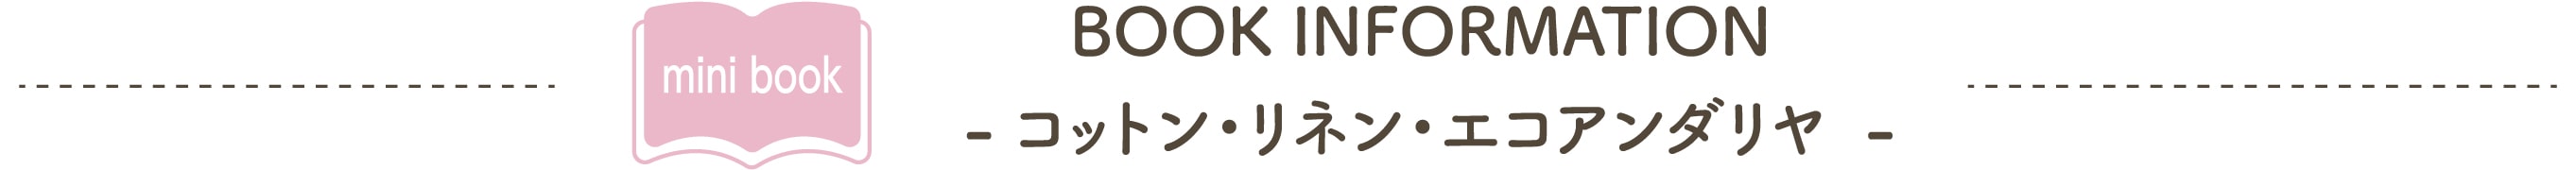 mini book BOOK INFORMATION -コットン・リネン・エコアンダリヤ-